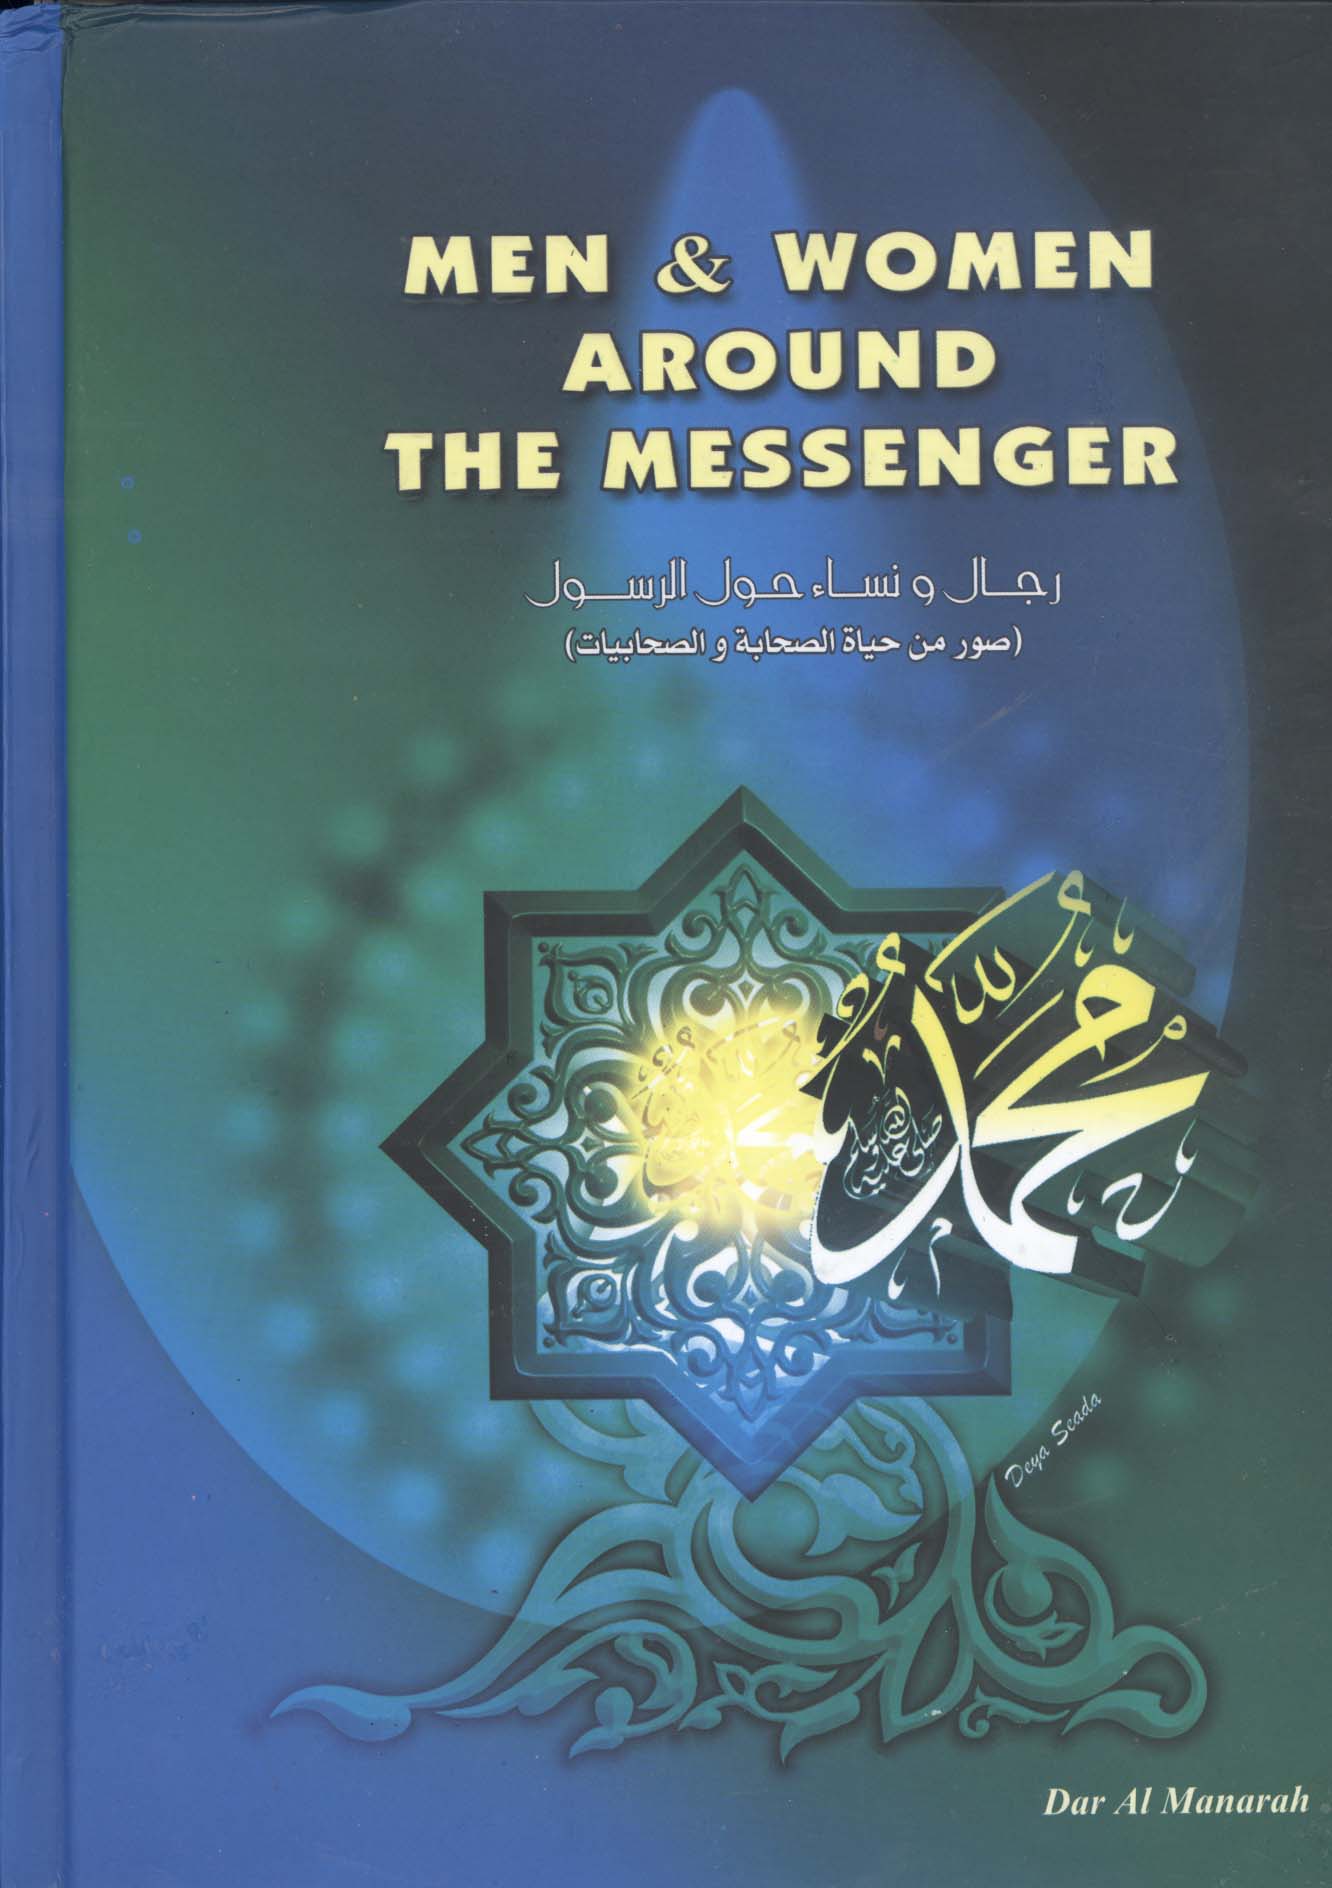 men & women around the messenger "peacebe uponn him"